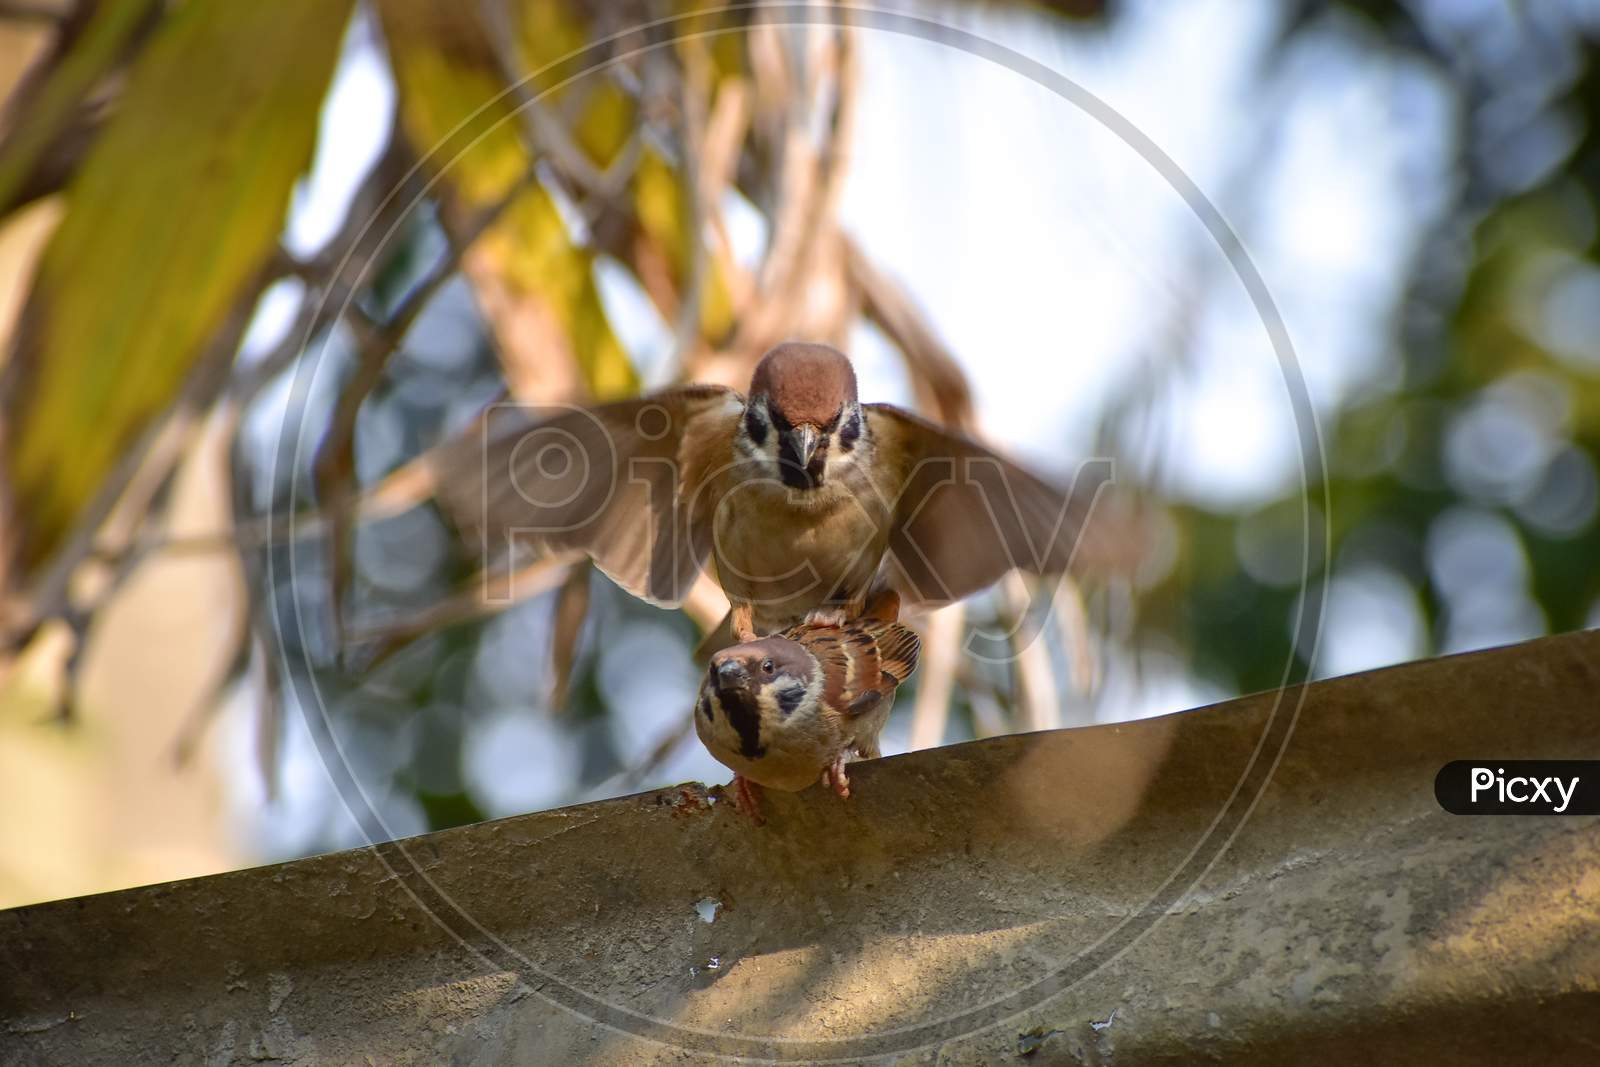 eurasian tree sparrow